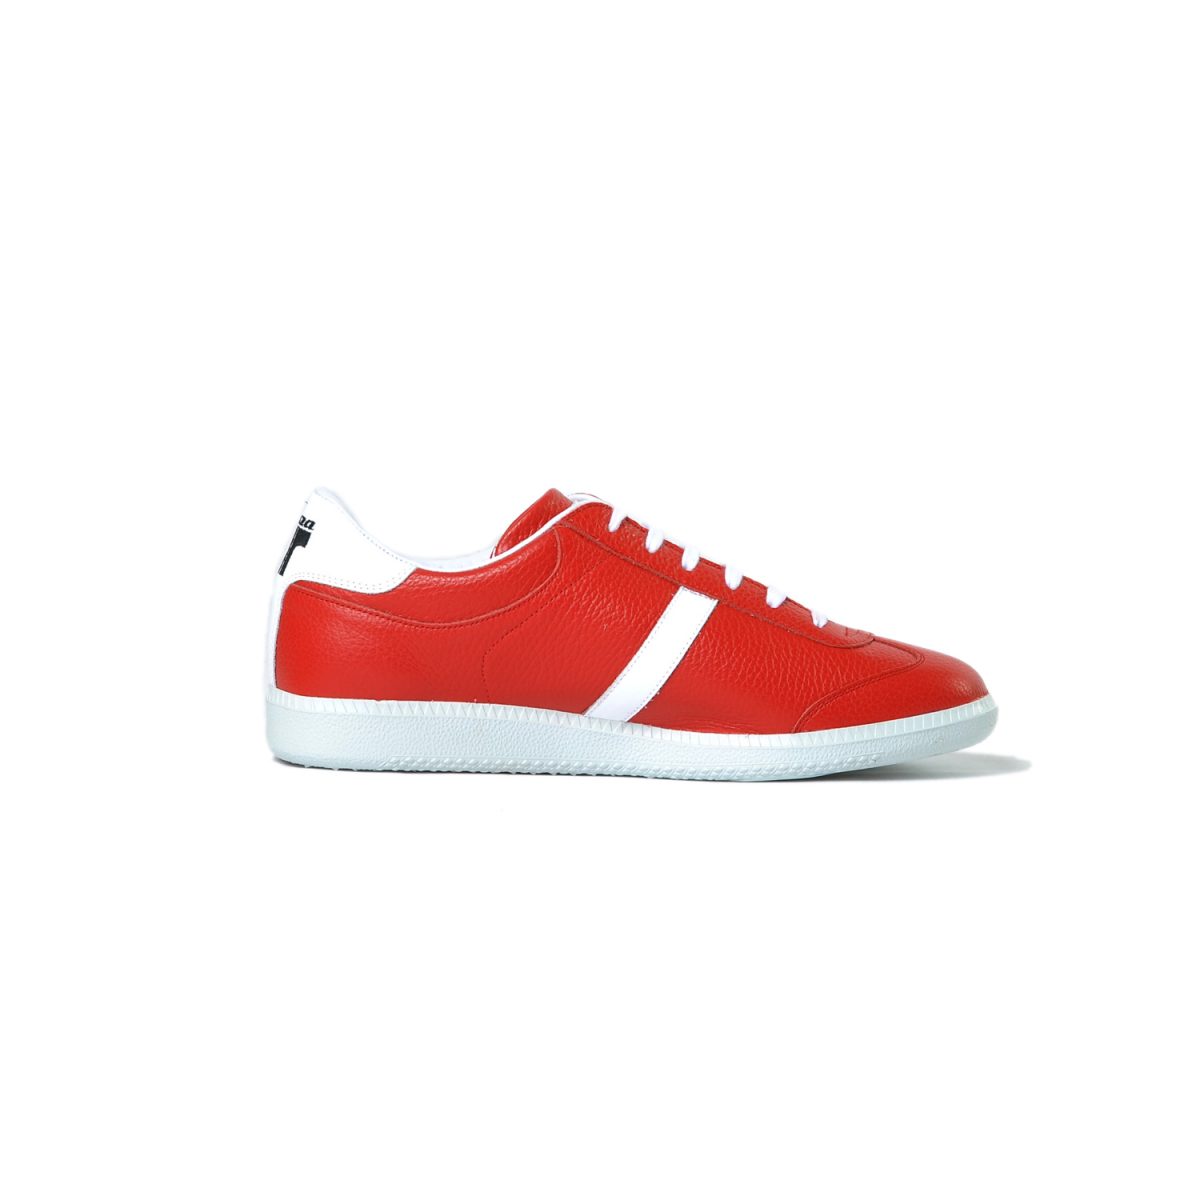 Tisza shoes - Compakt - Red-white